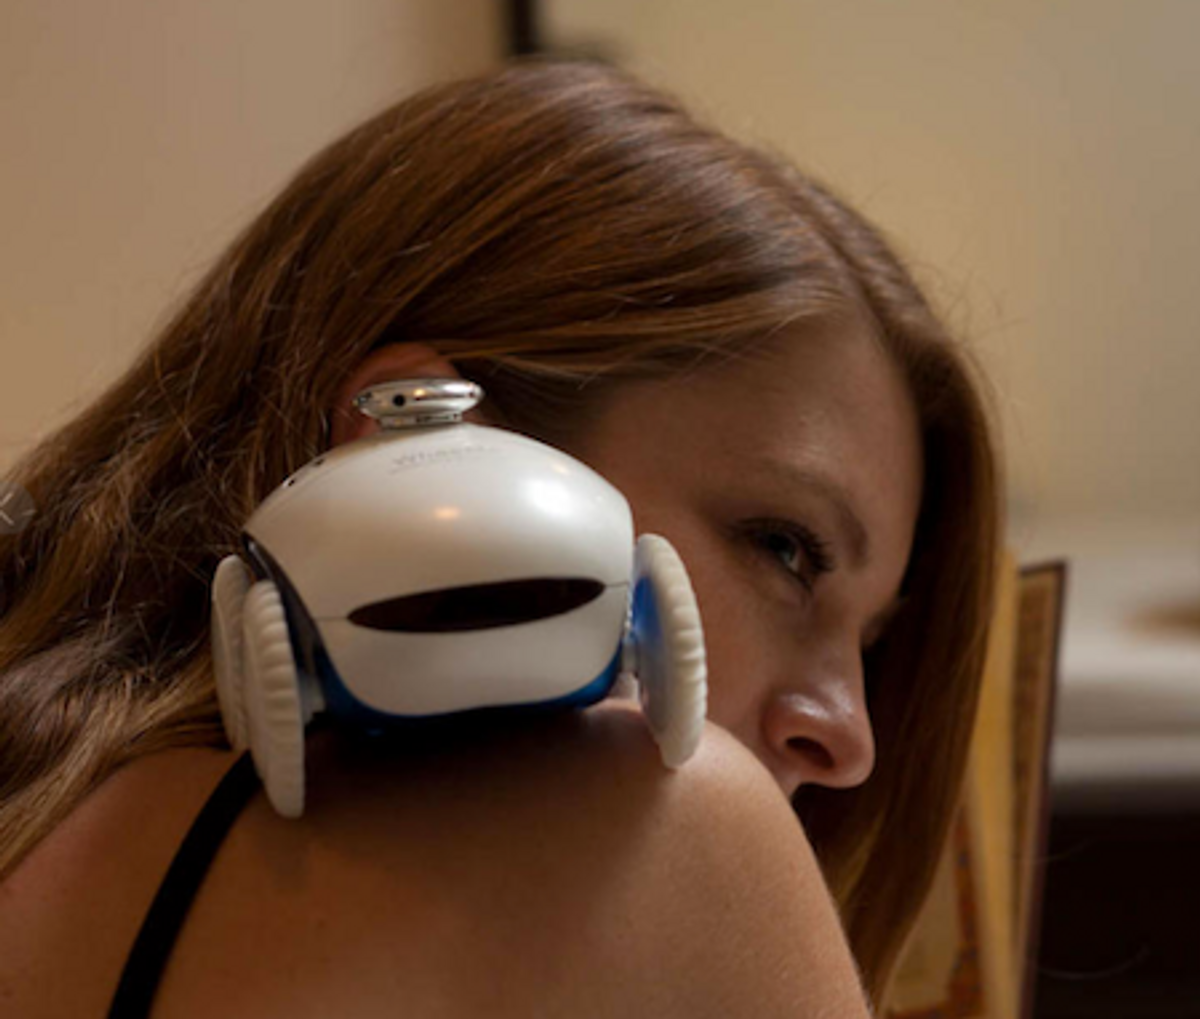 WheeMe Massage Robot Roams Around Your Back